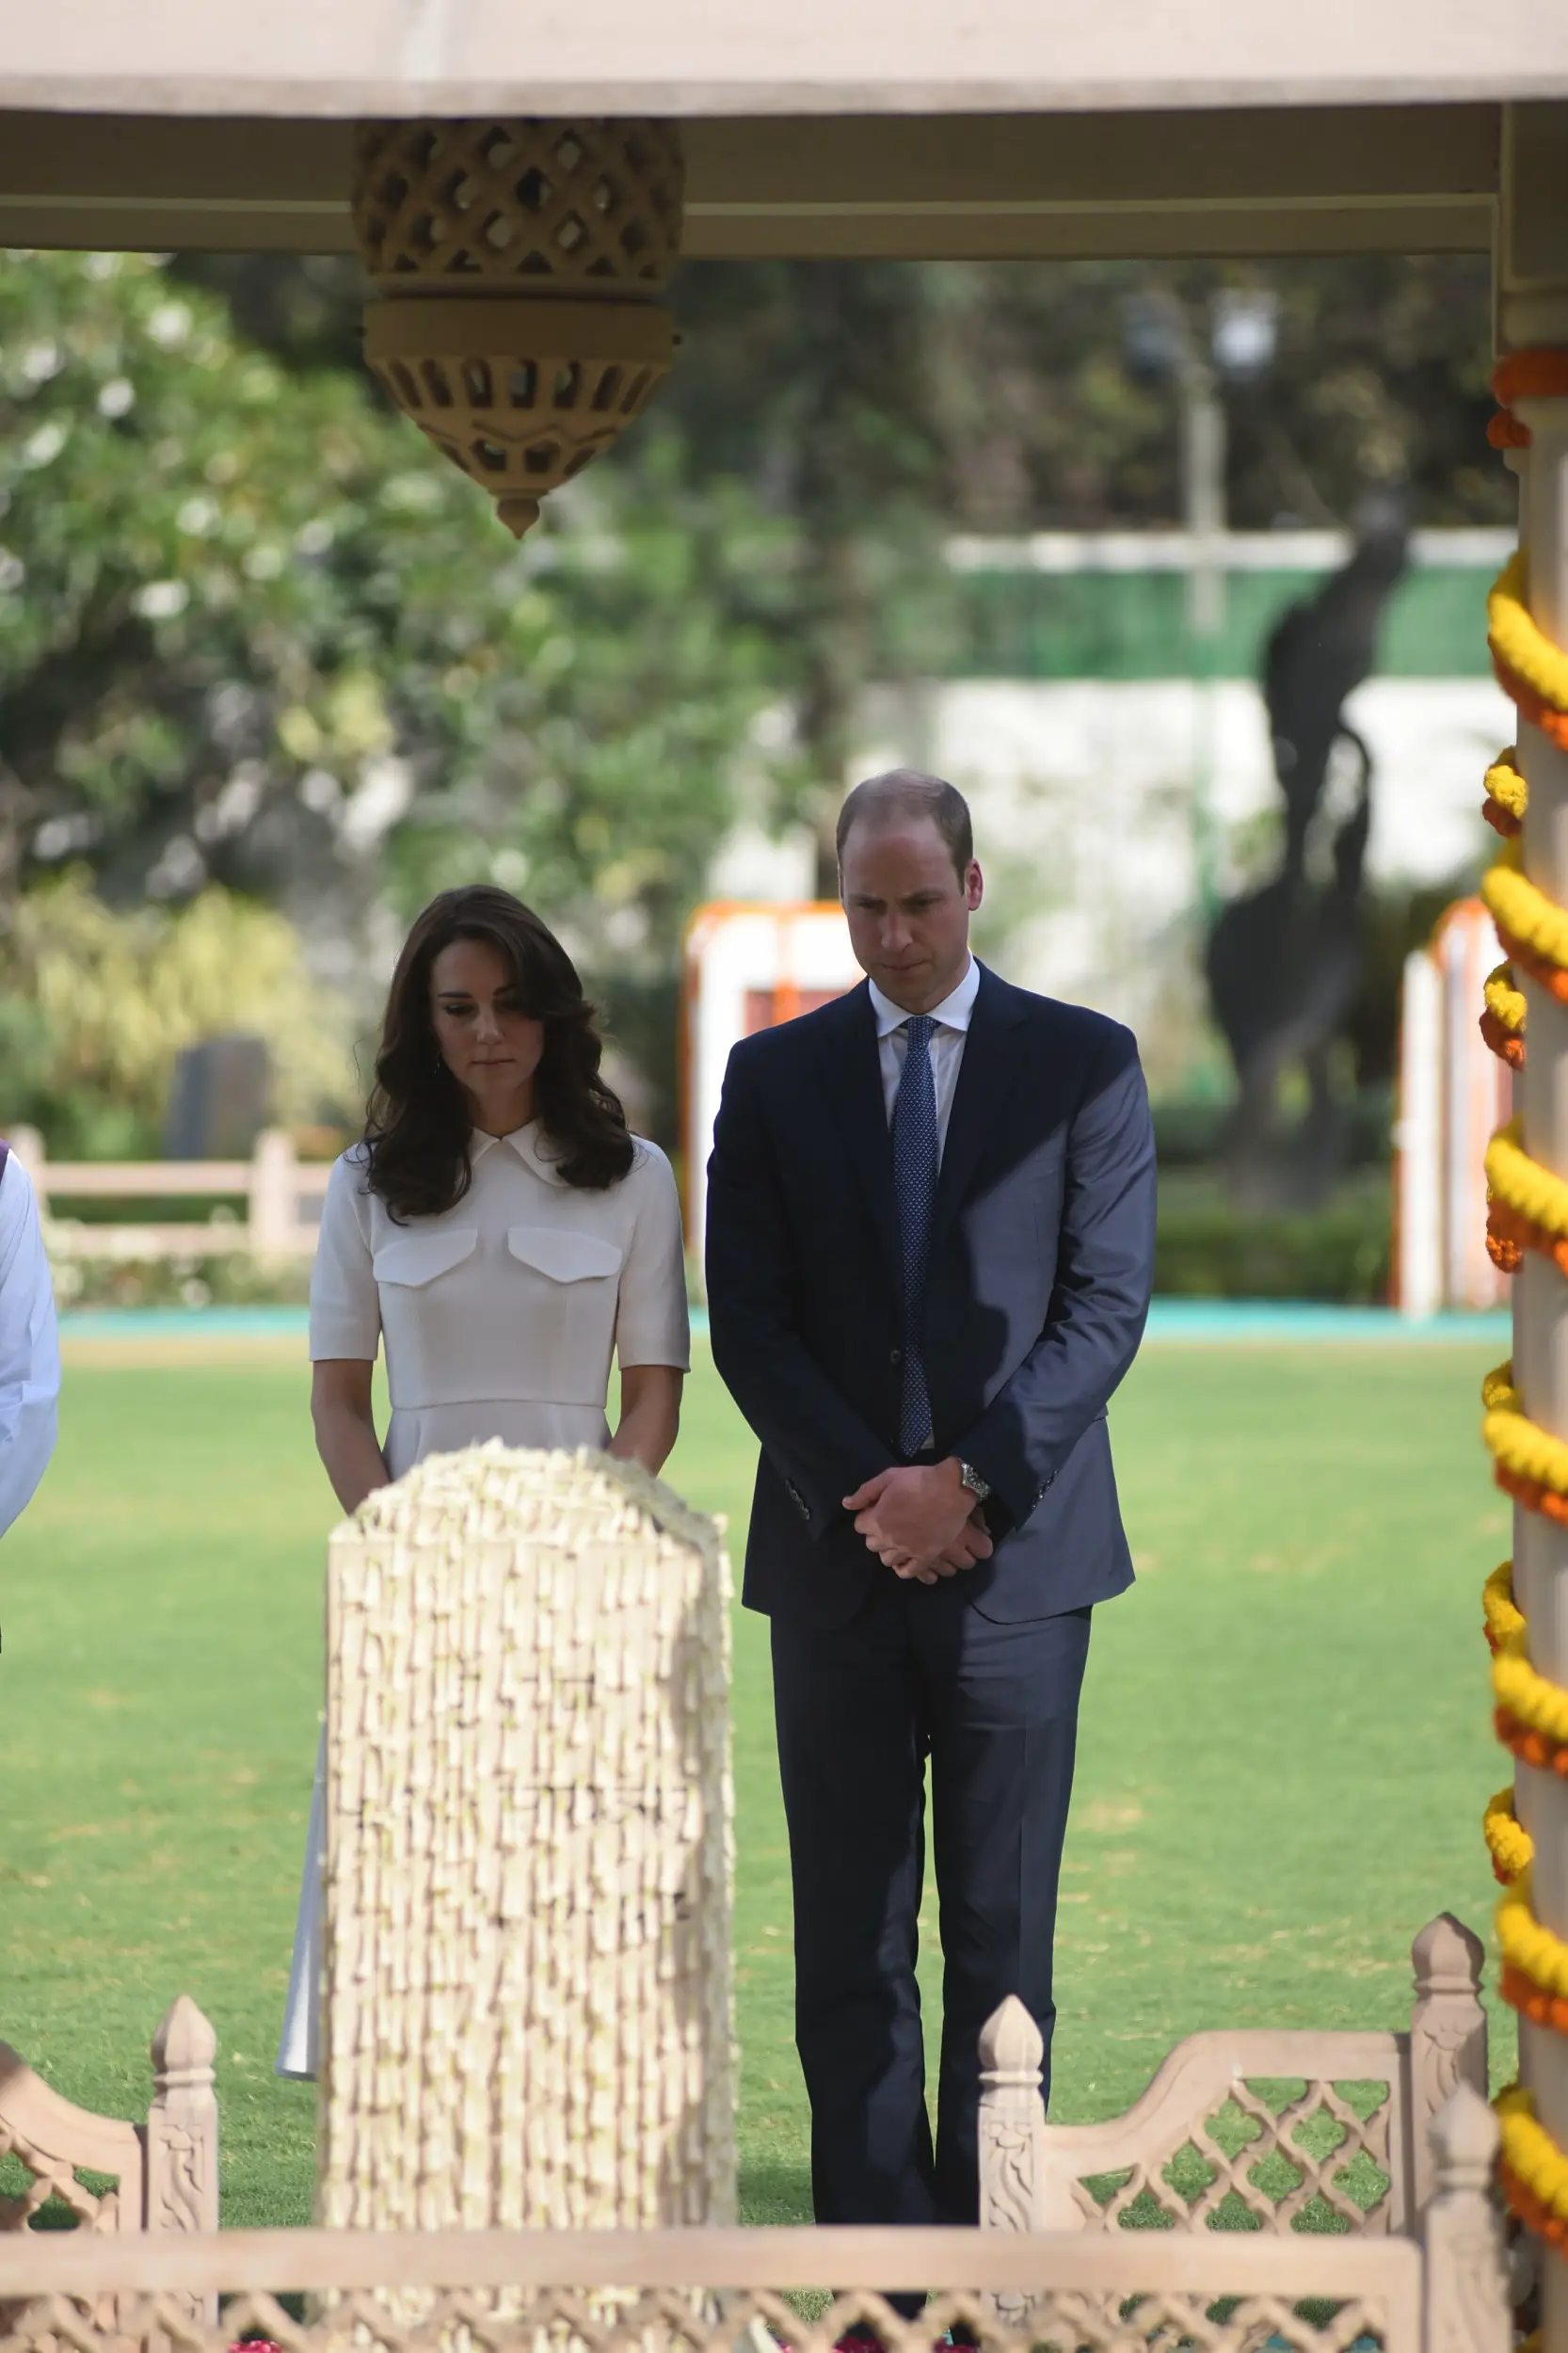 The Duke and Duchess of Cambridge visited Gandhi Smriti in India